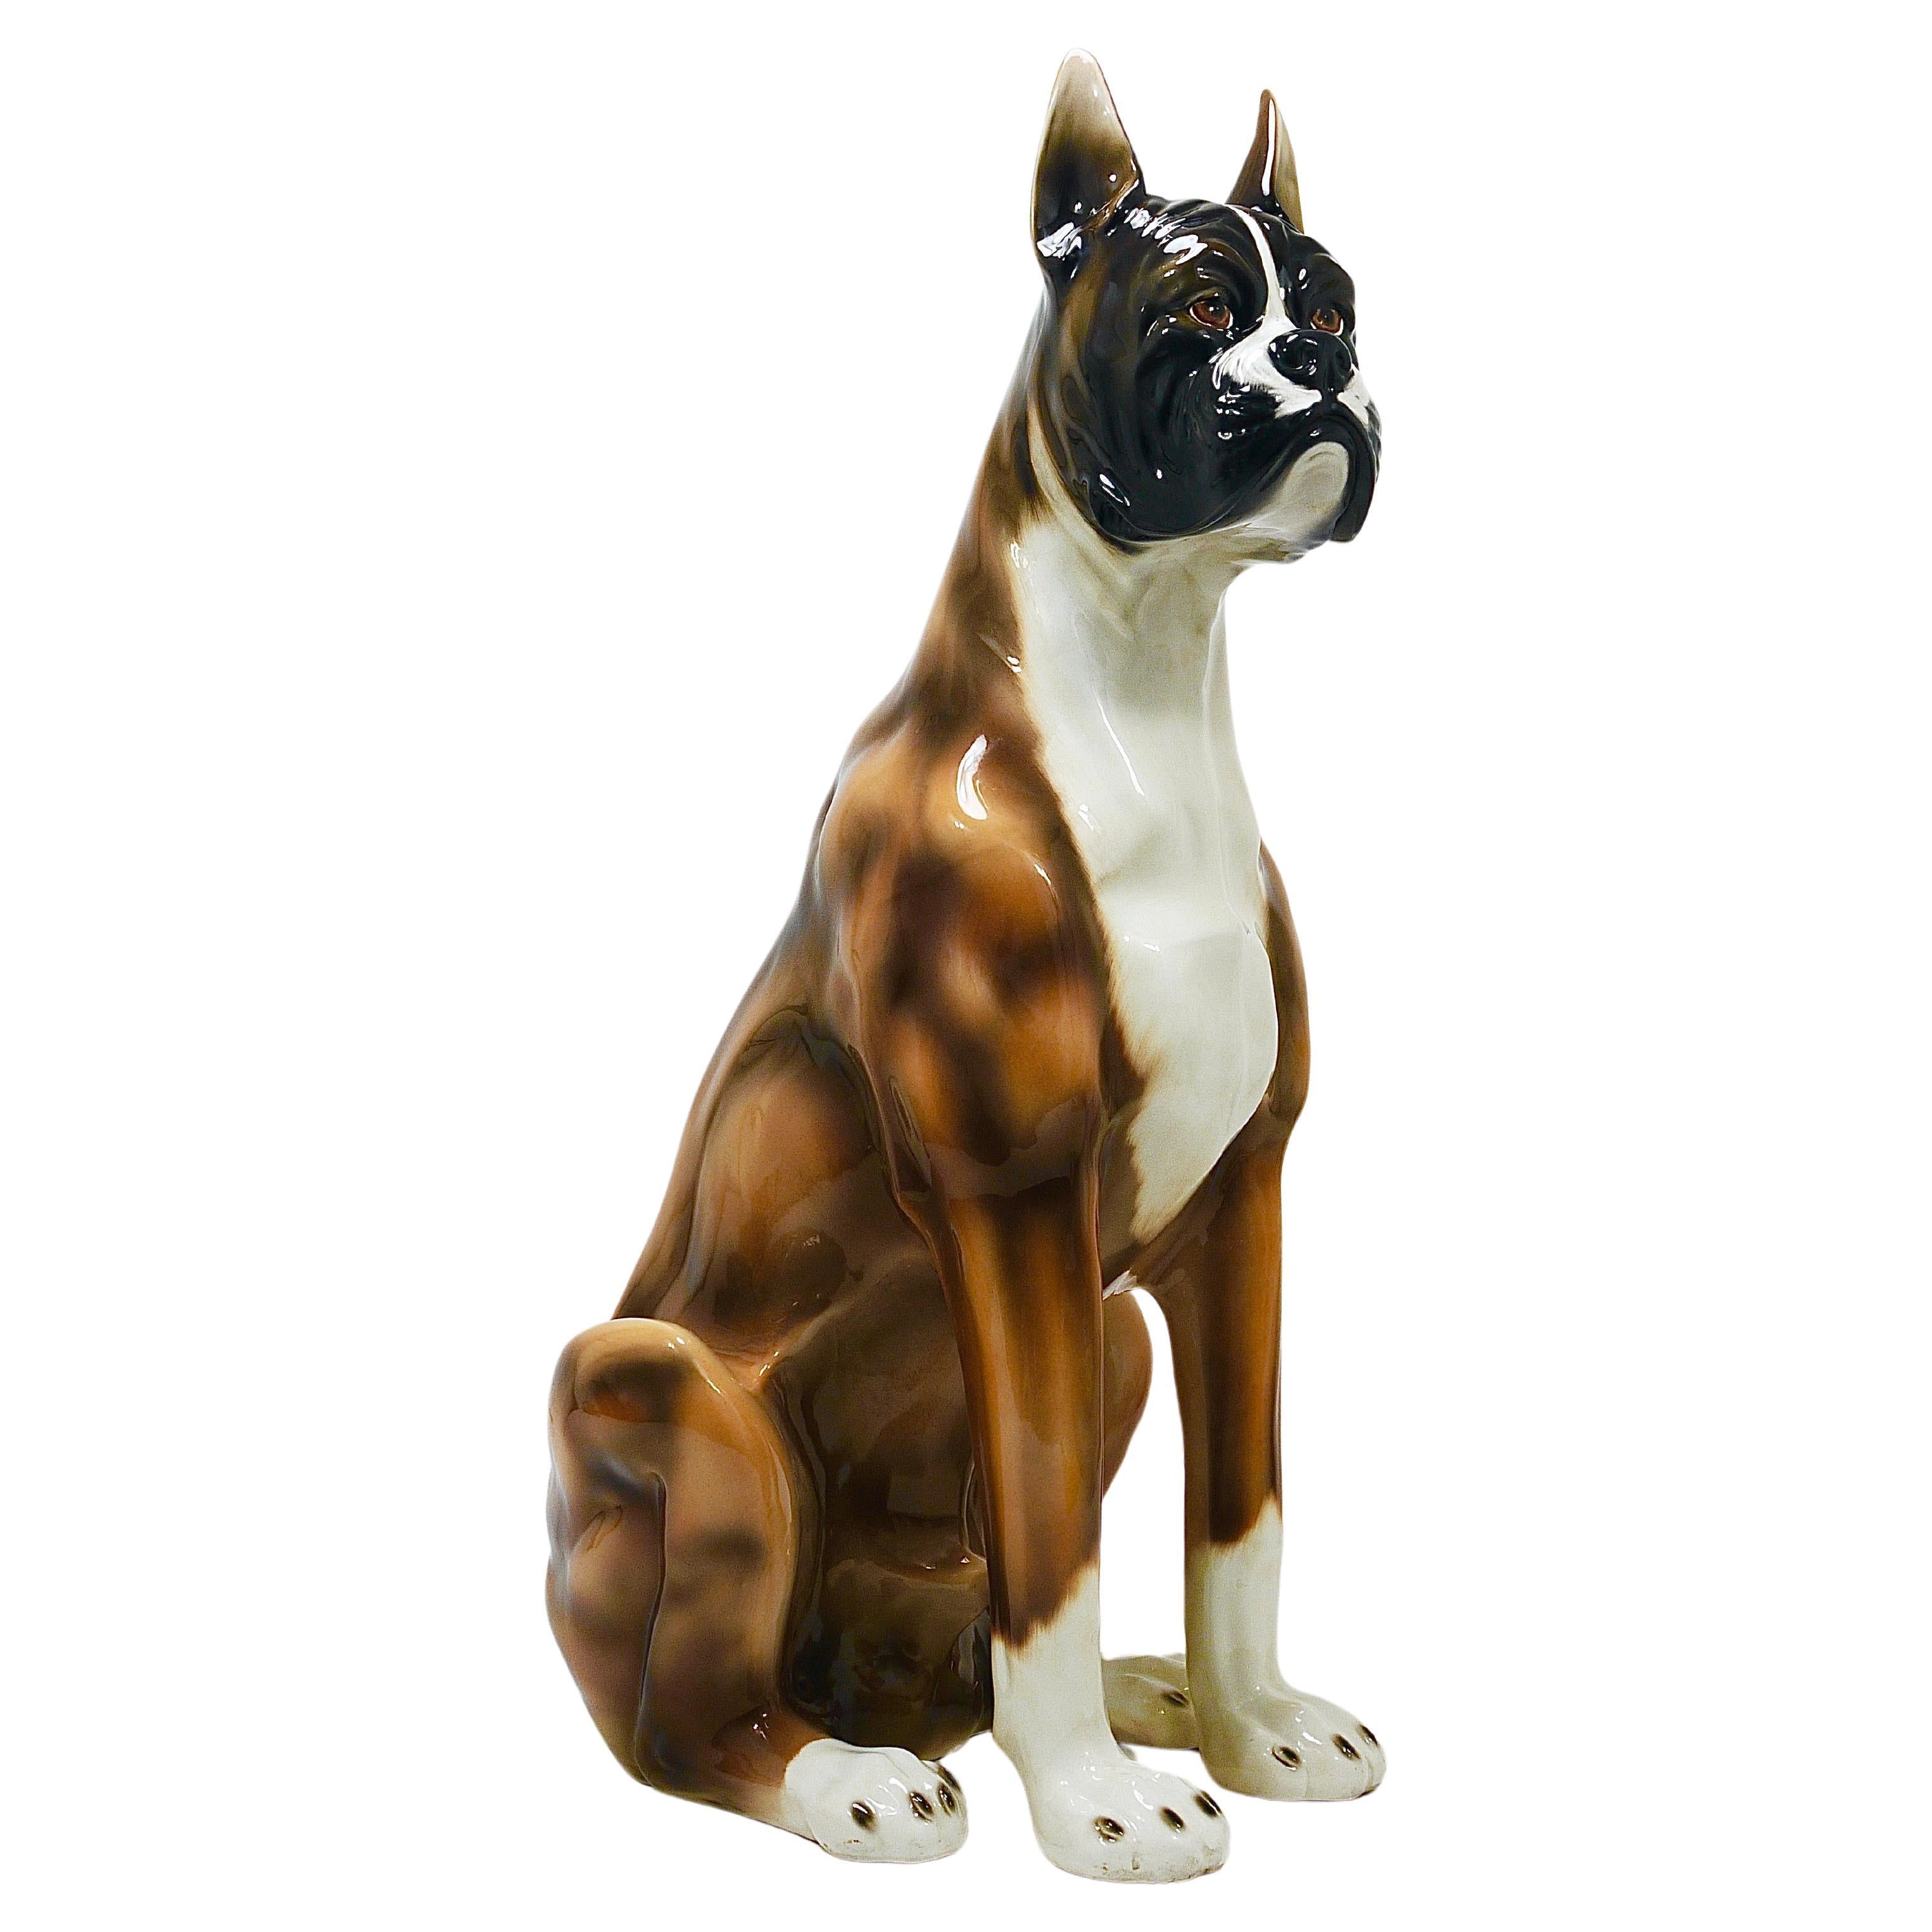 Boxer Dog Life-Size Majolica Statue Sculpture, Glazed Ceramic, Italy, 1970s For Sale